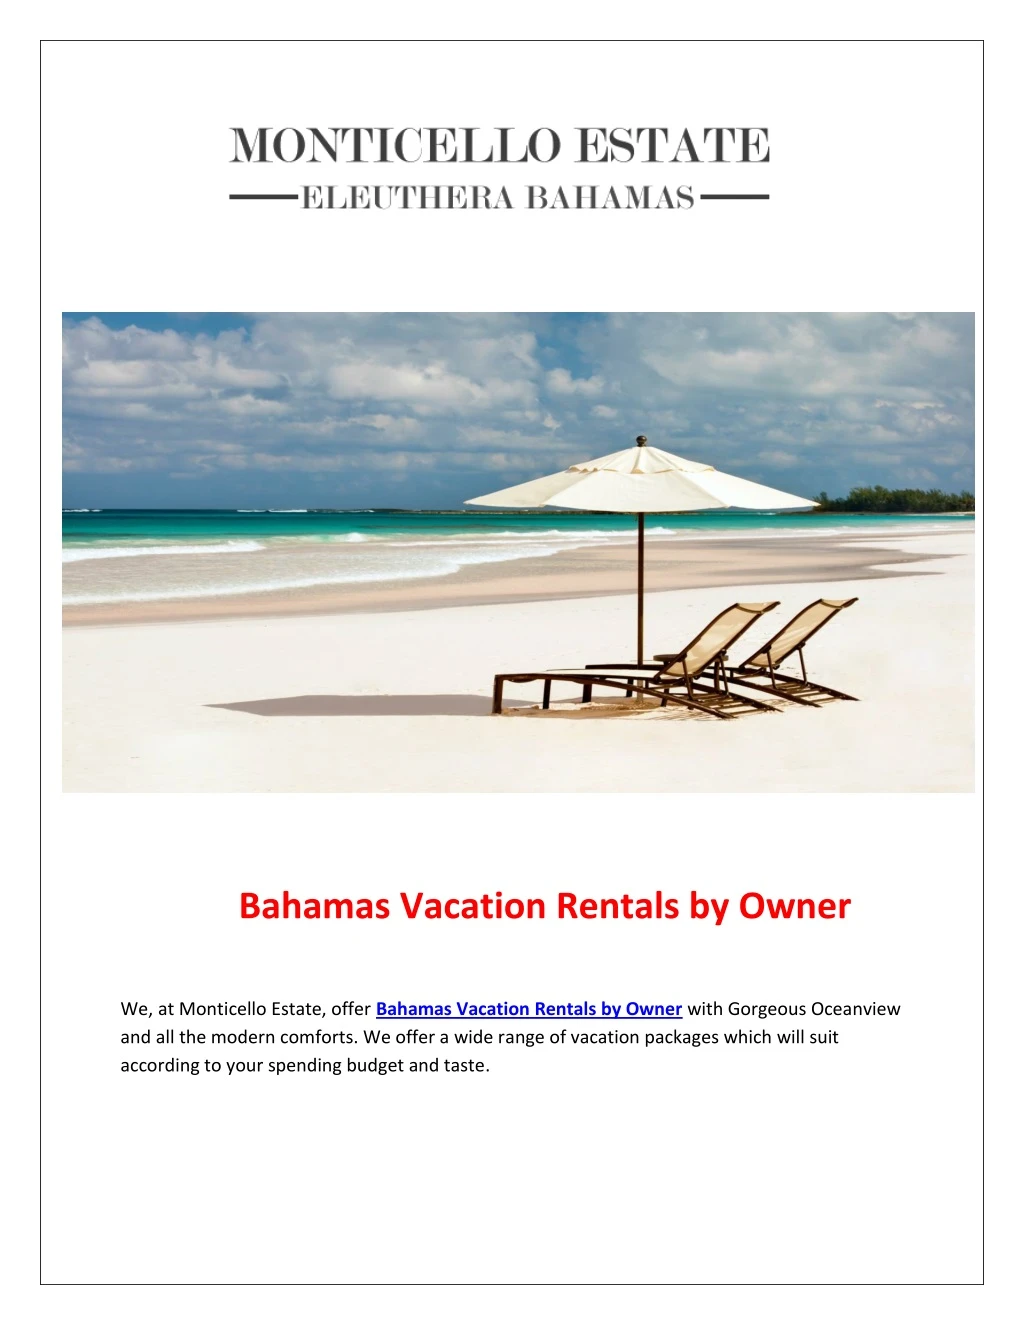 bahamas vacation rentals by owner